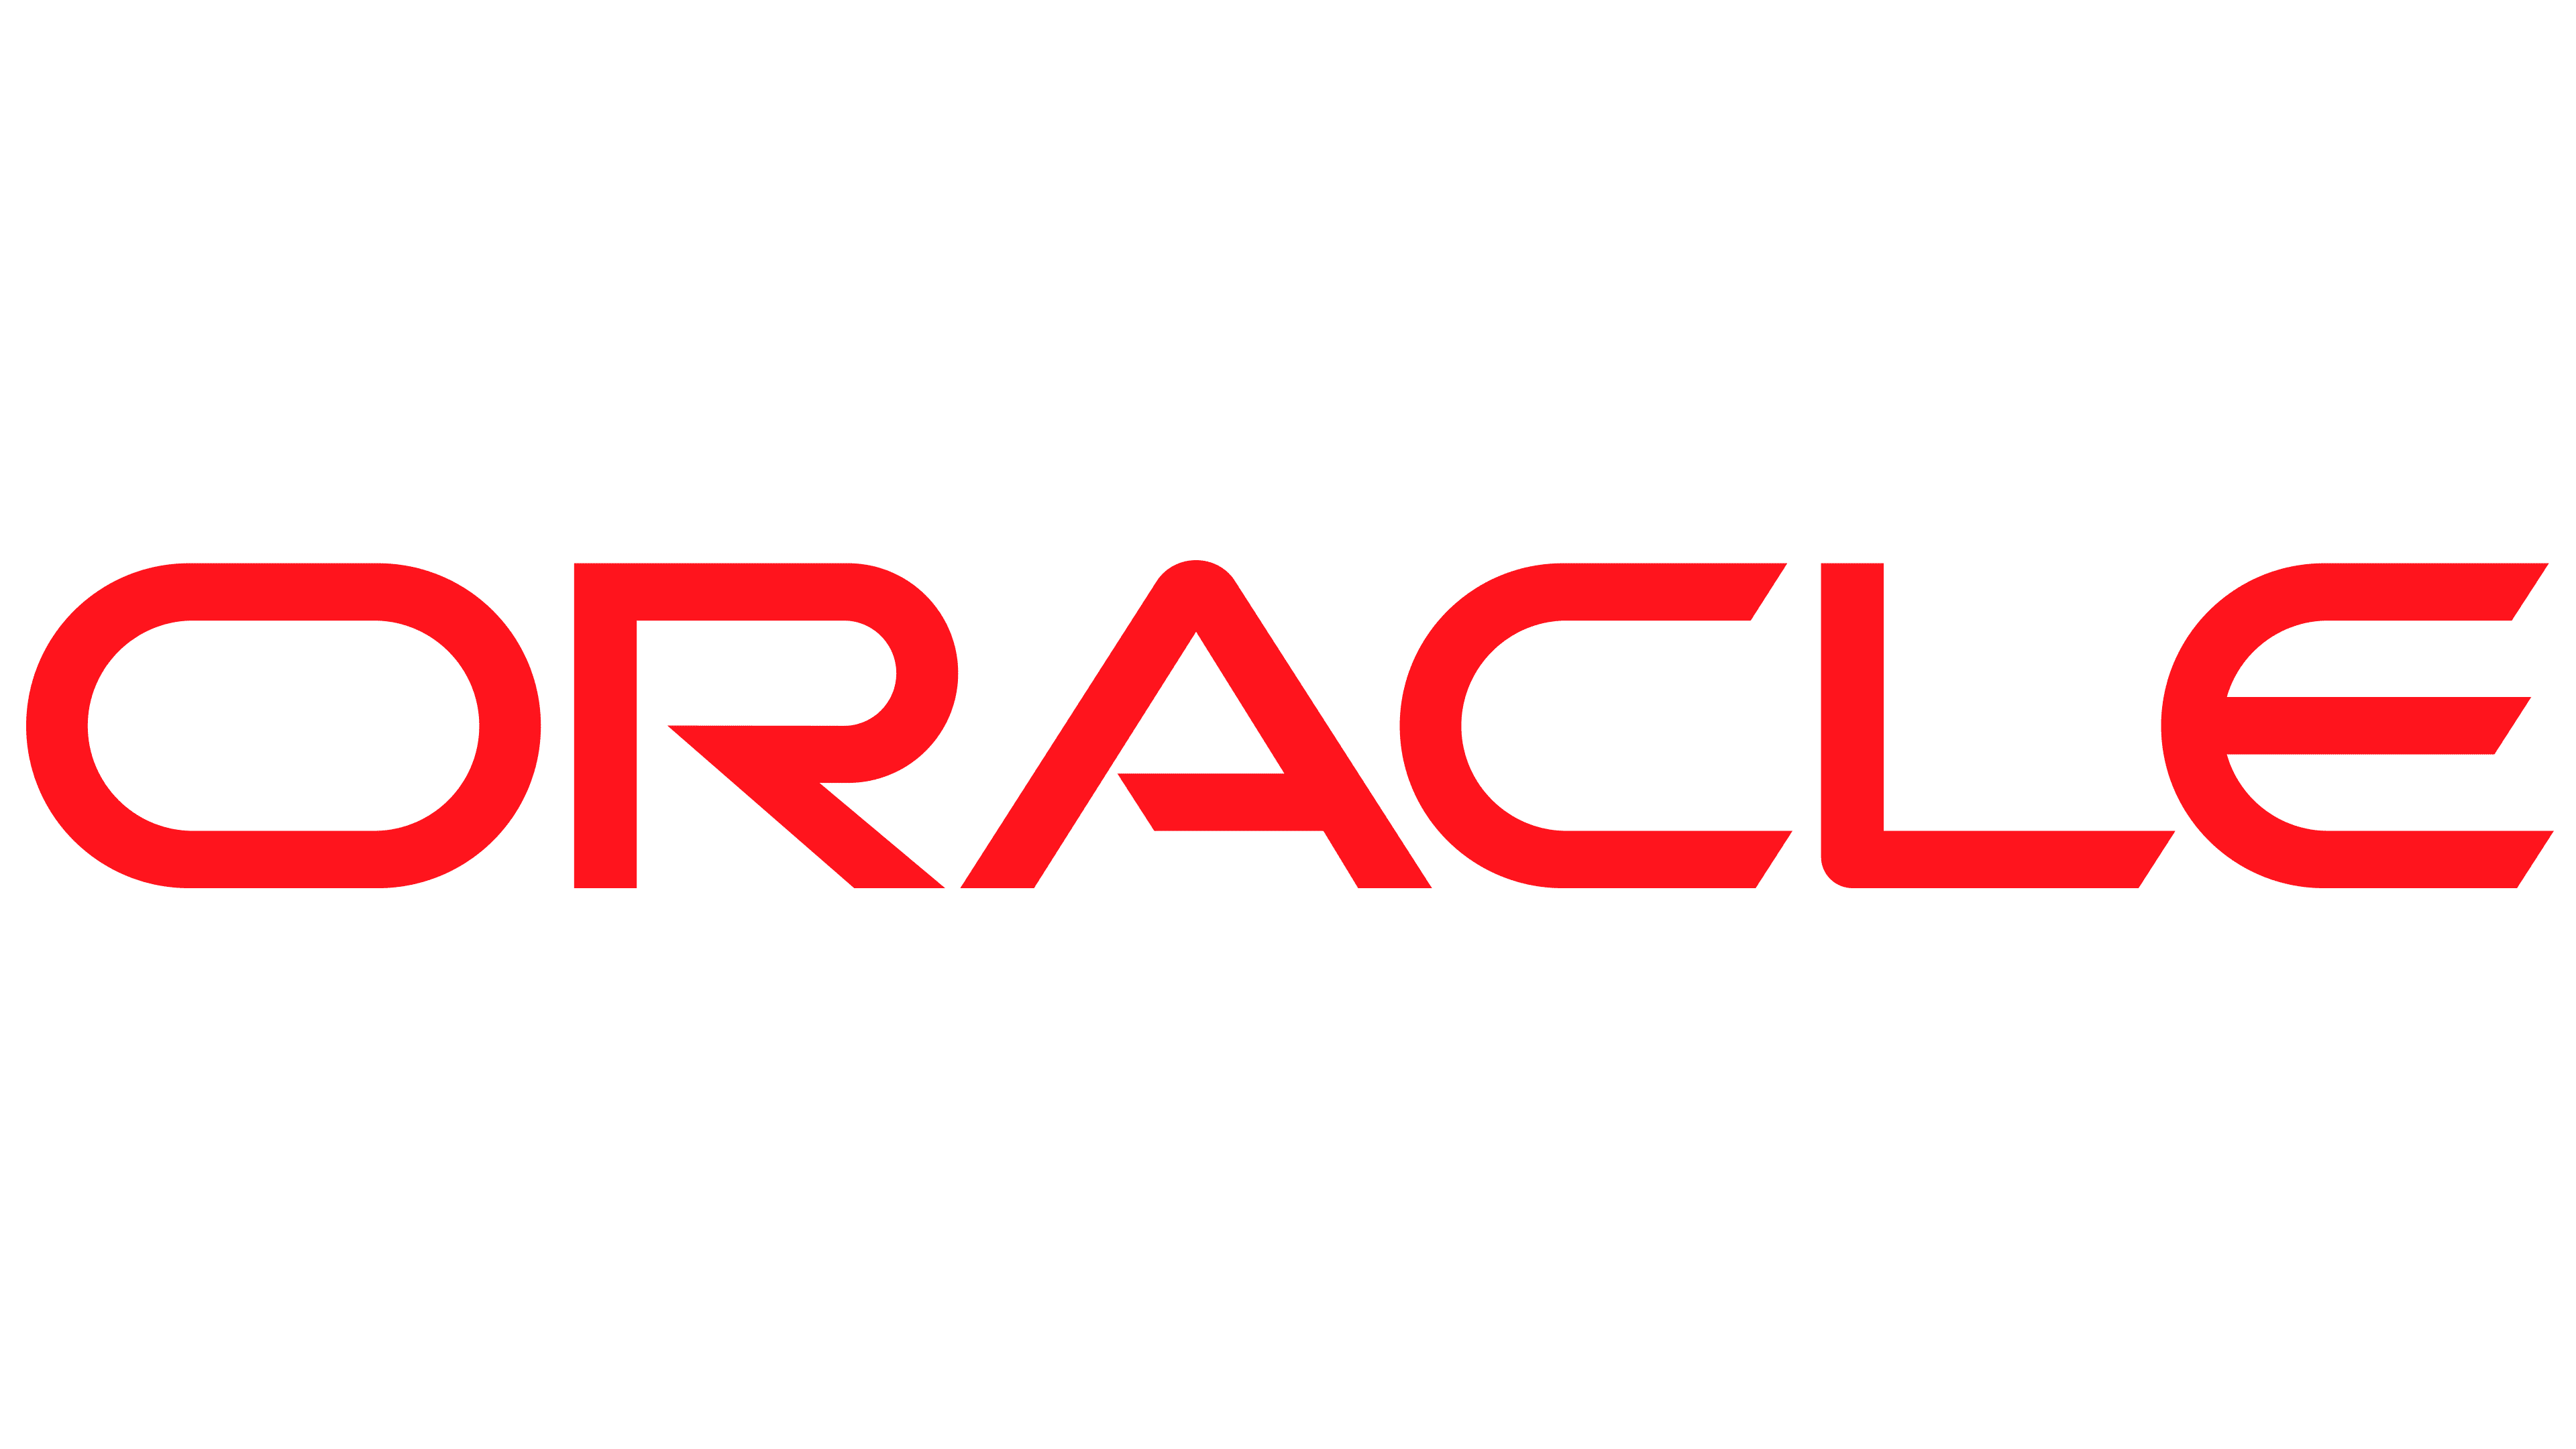 Image of Oracle database management system logo for software development